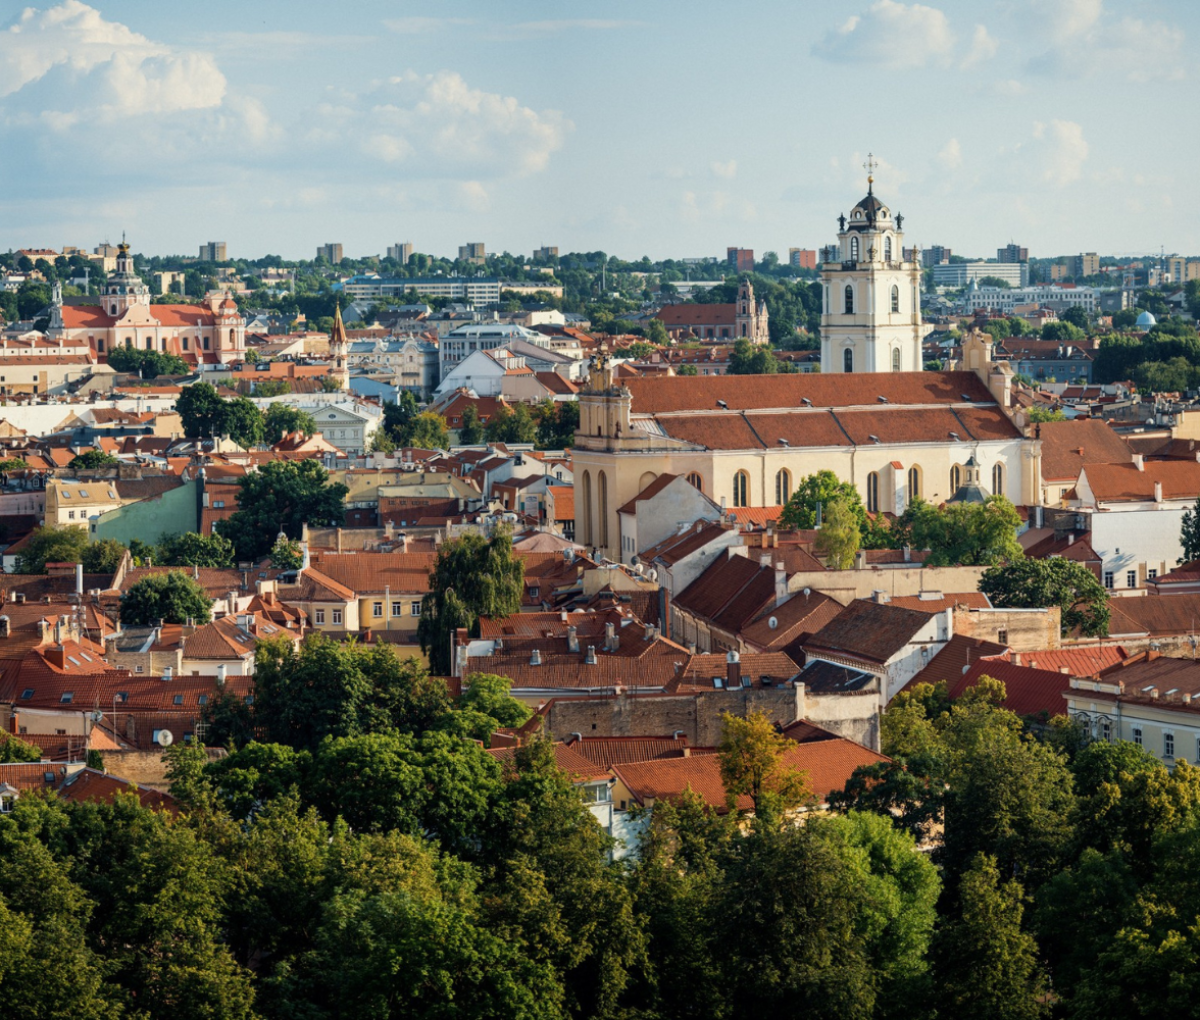 Daytime during summer in Vilnius, Lithuania